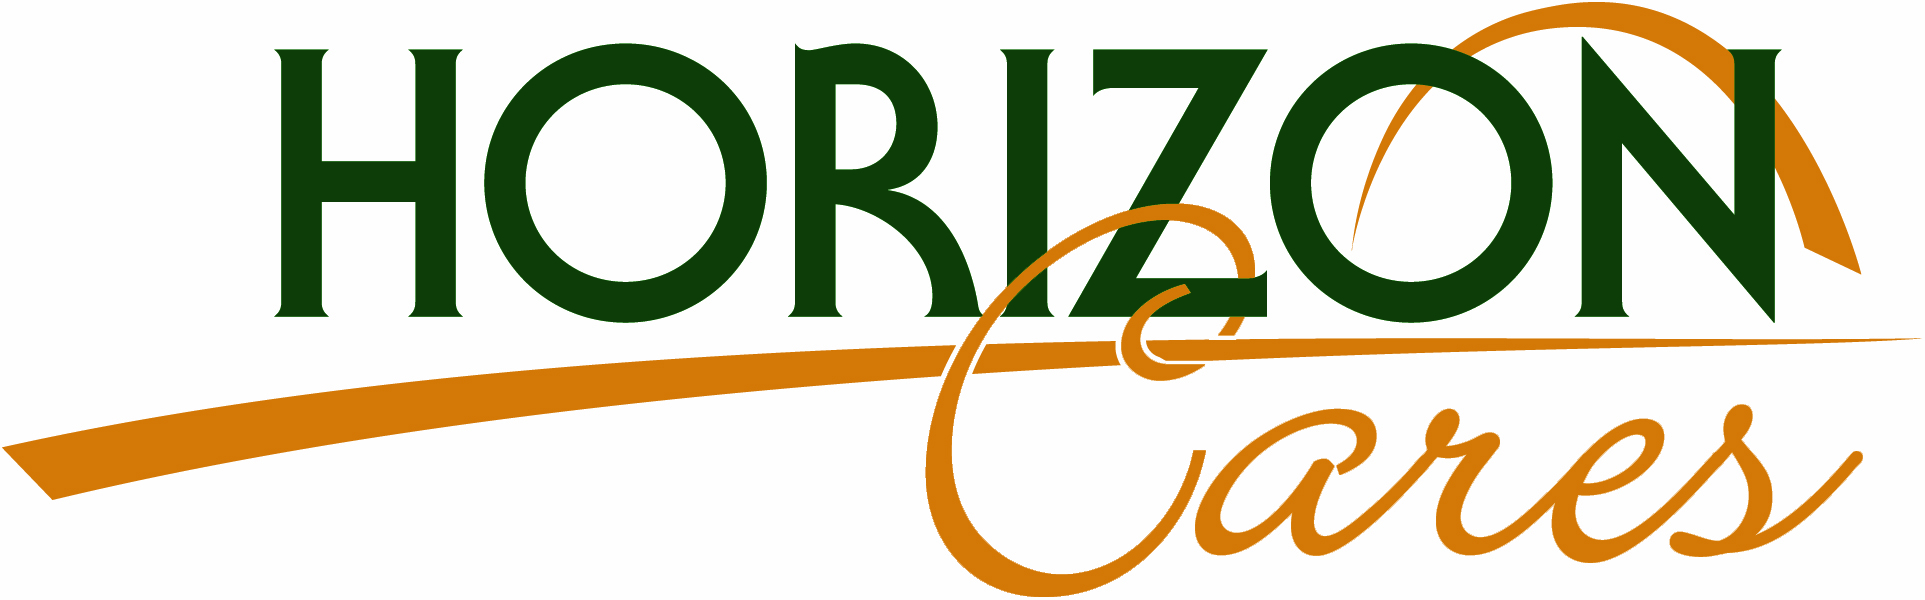 Horizon Cares Logo